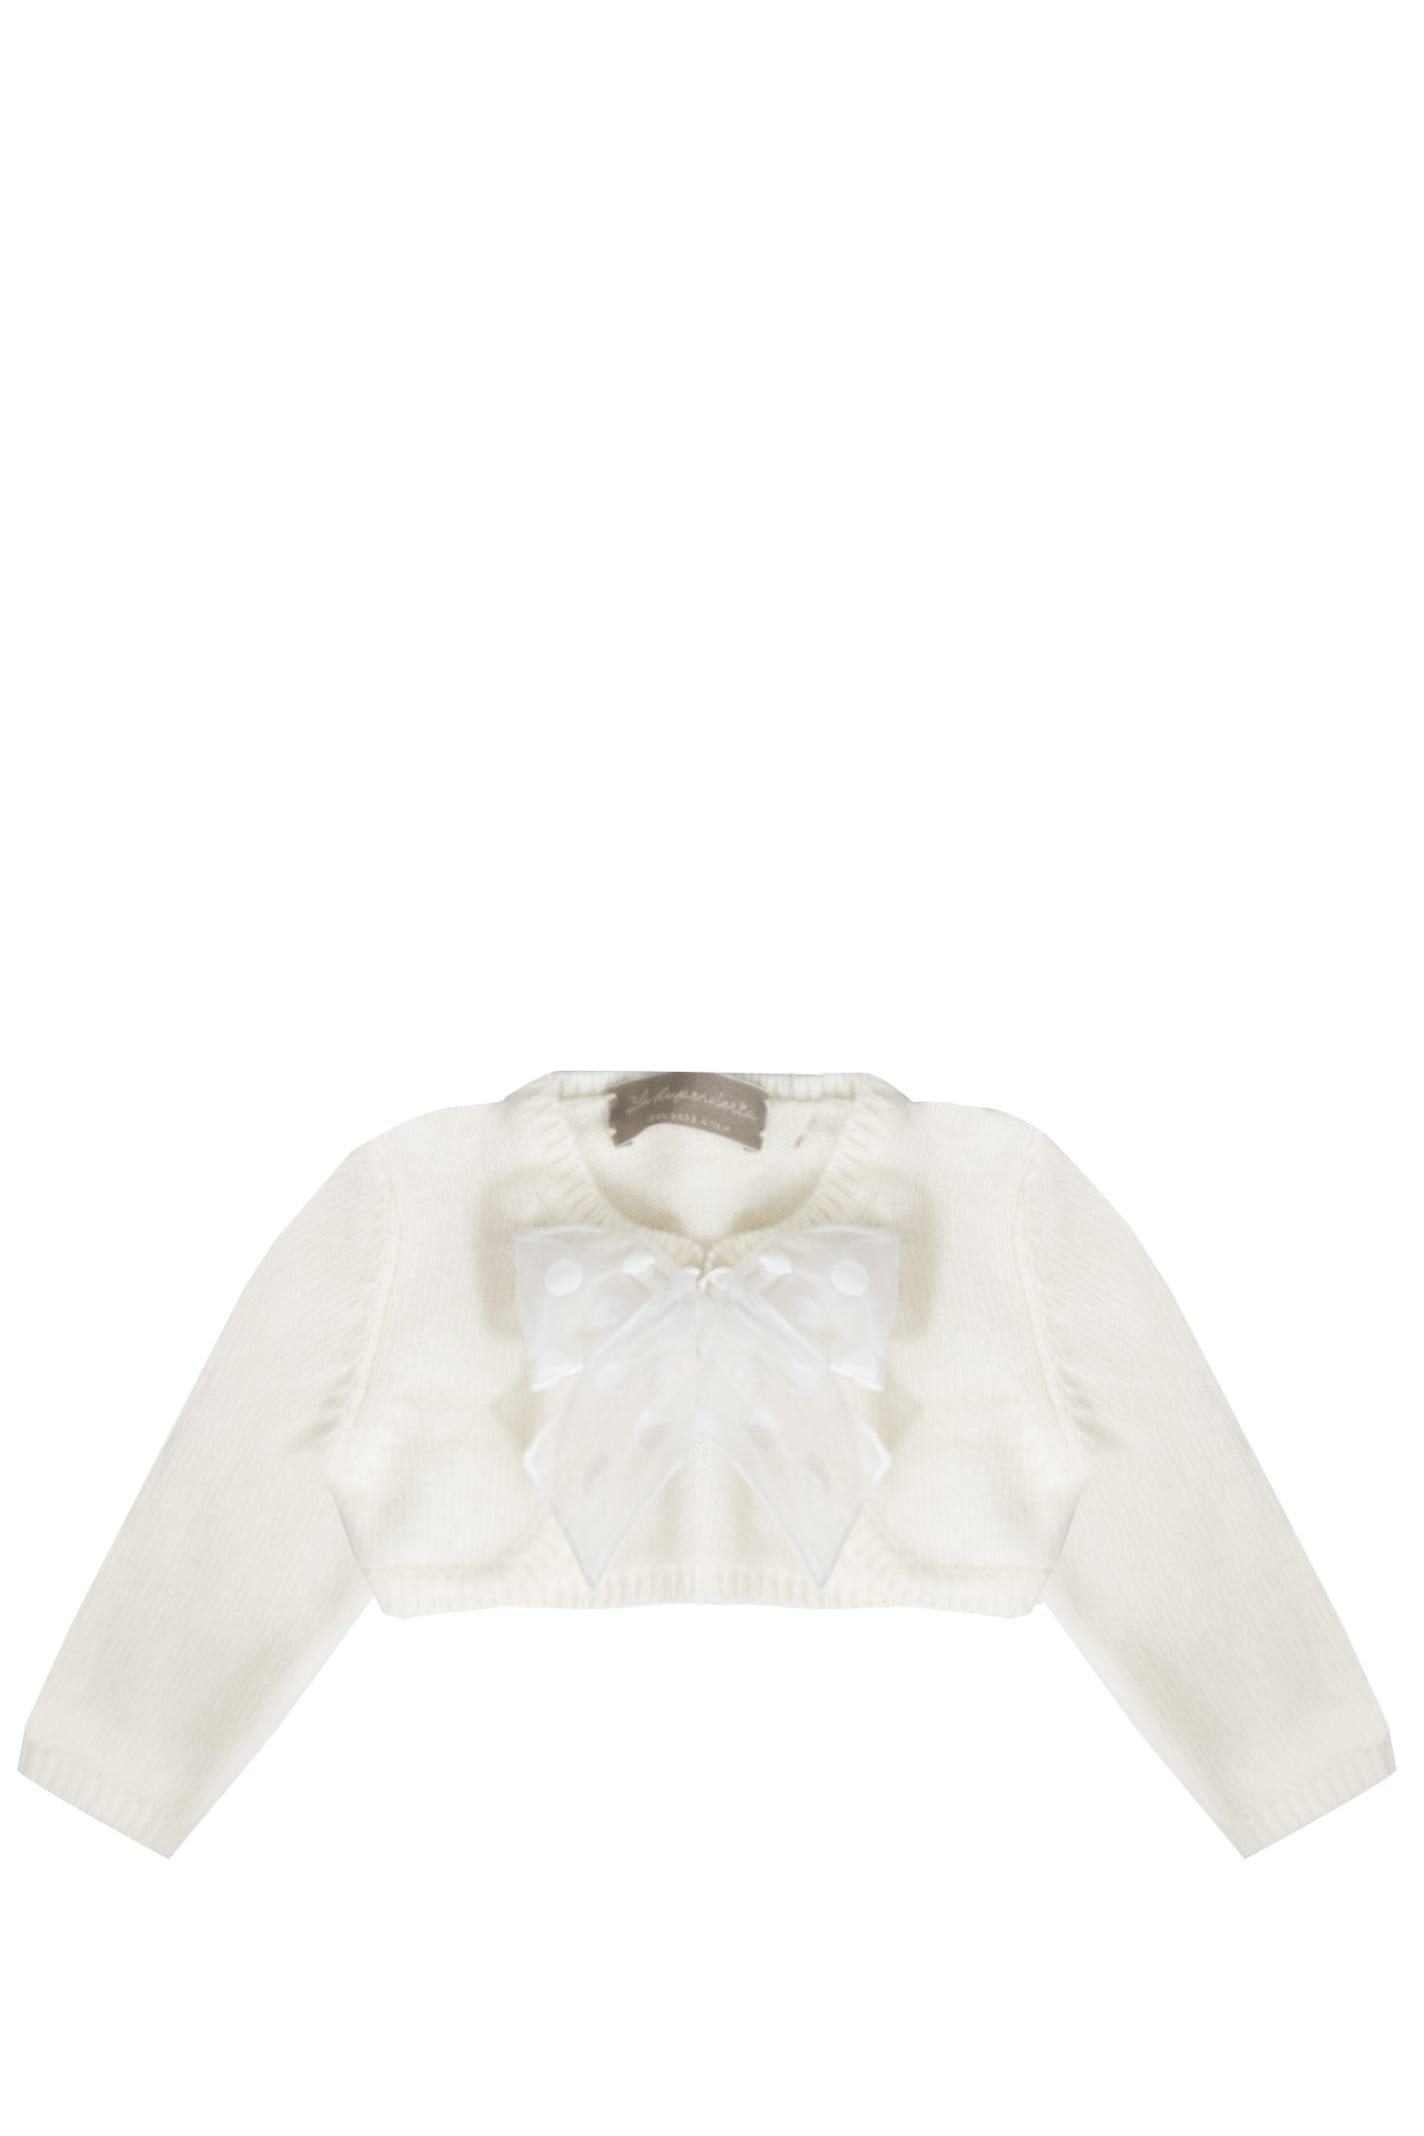 La Stupenderia Babies' Wool Sweater In White